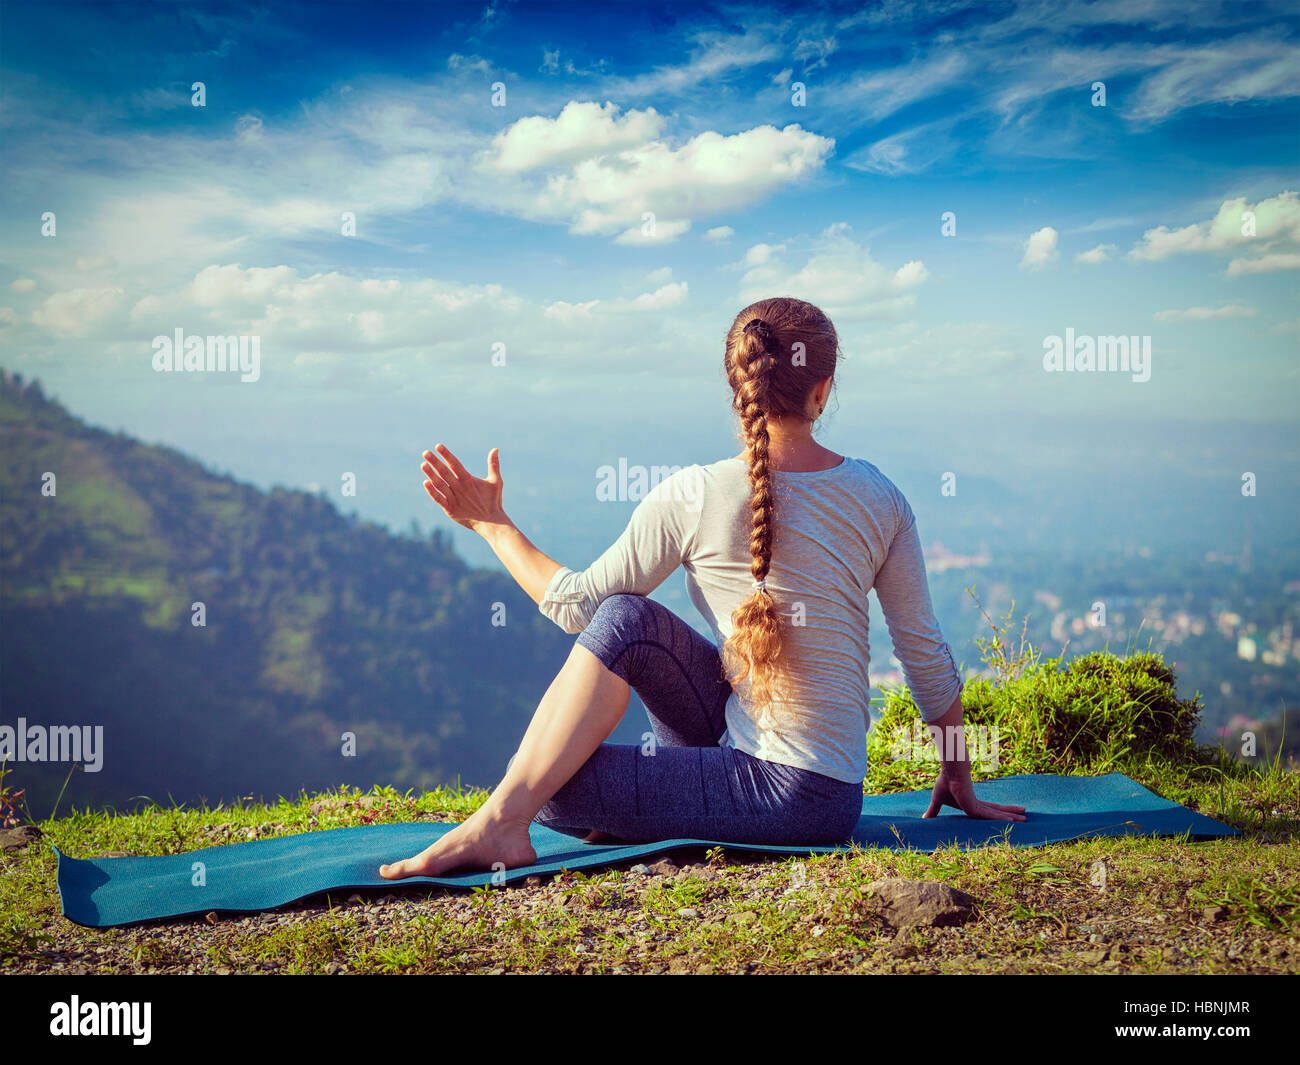 Woman practices yoga asana outdoors Stock Photo